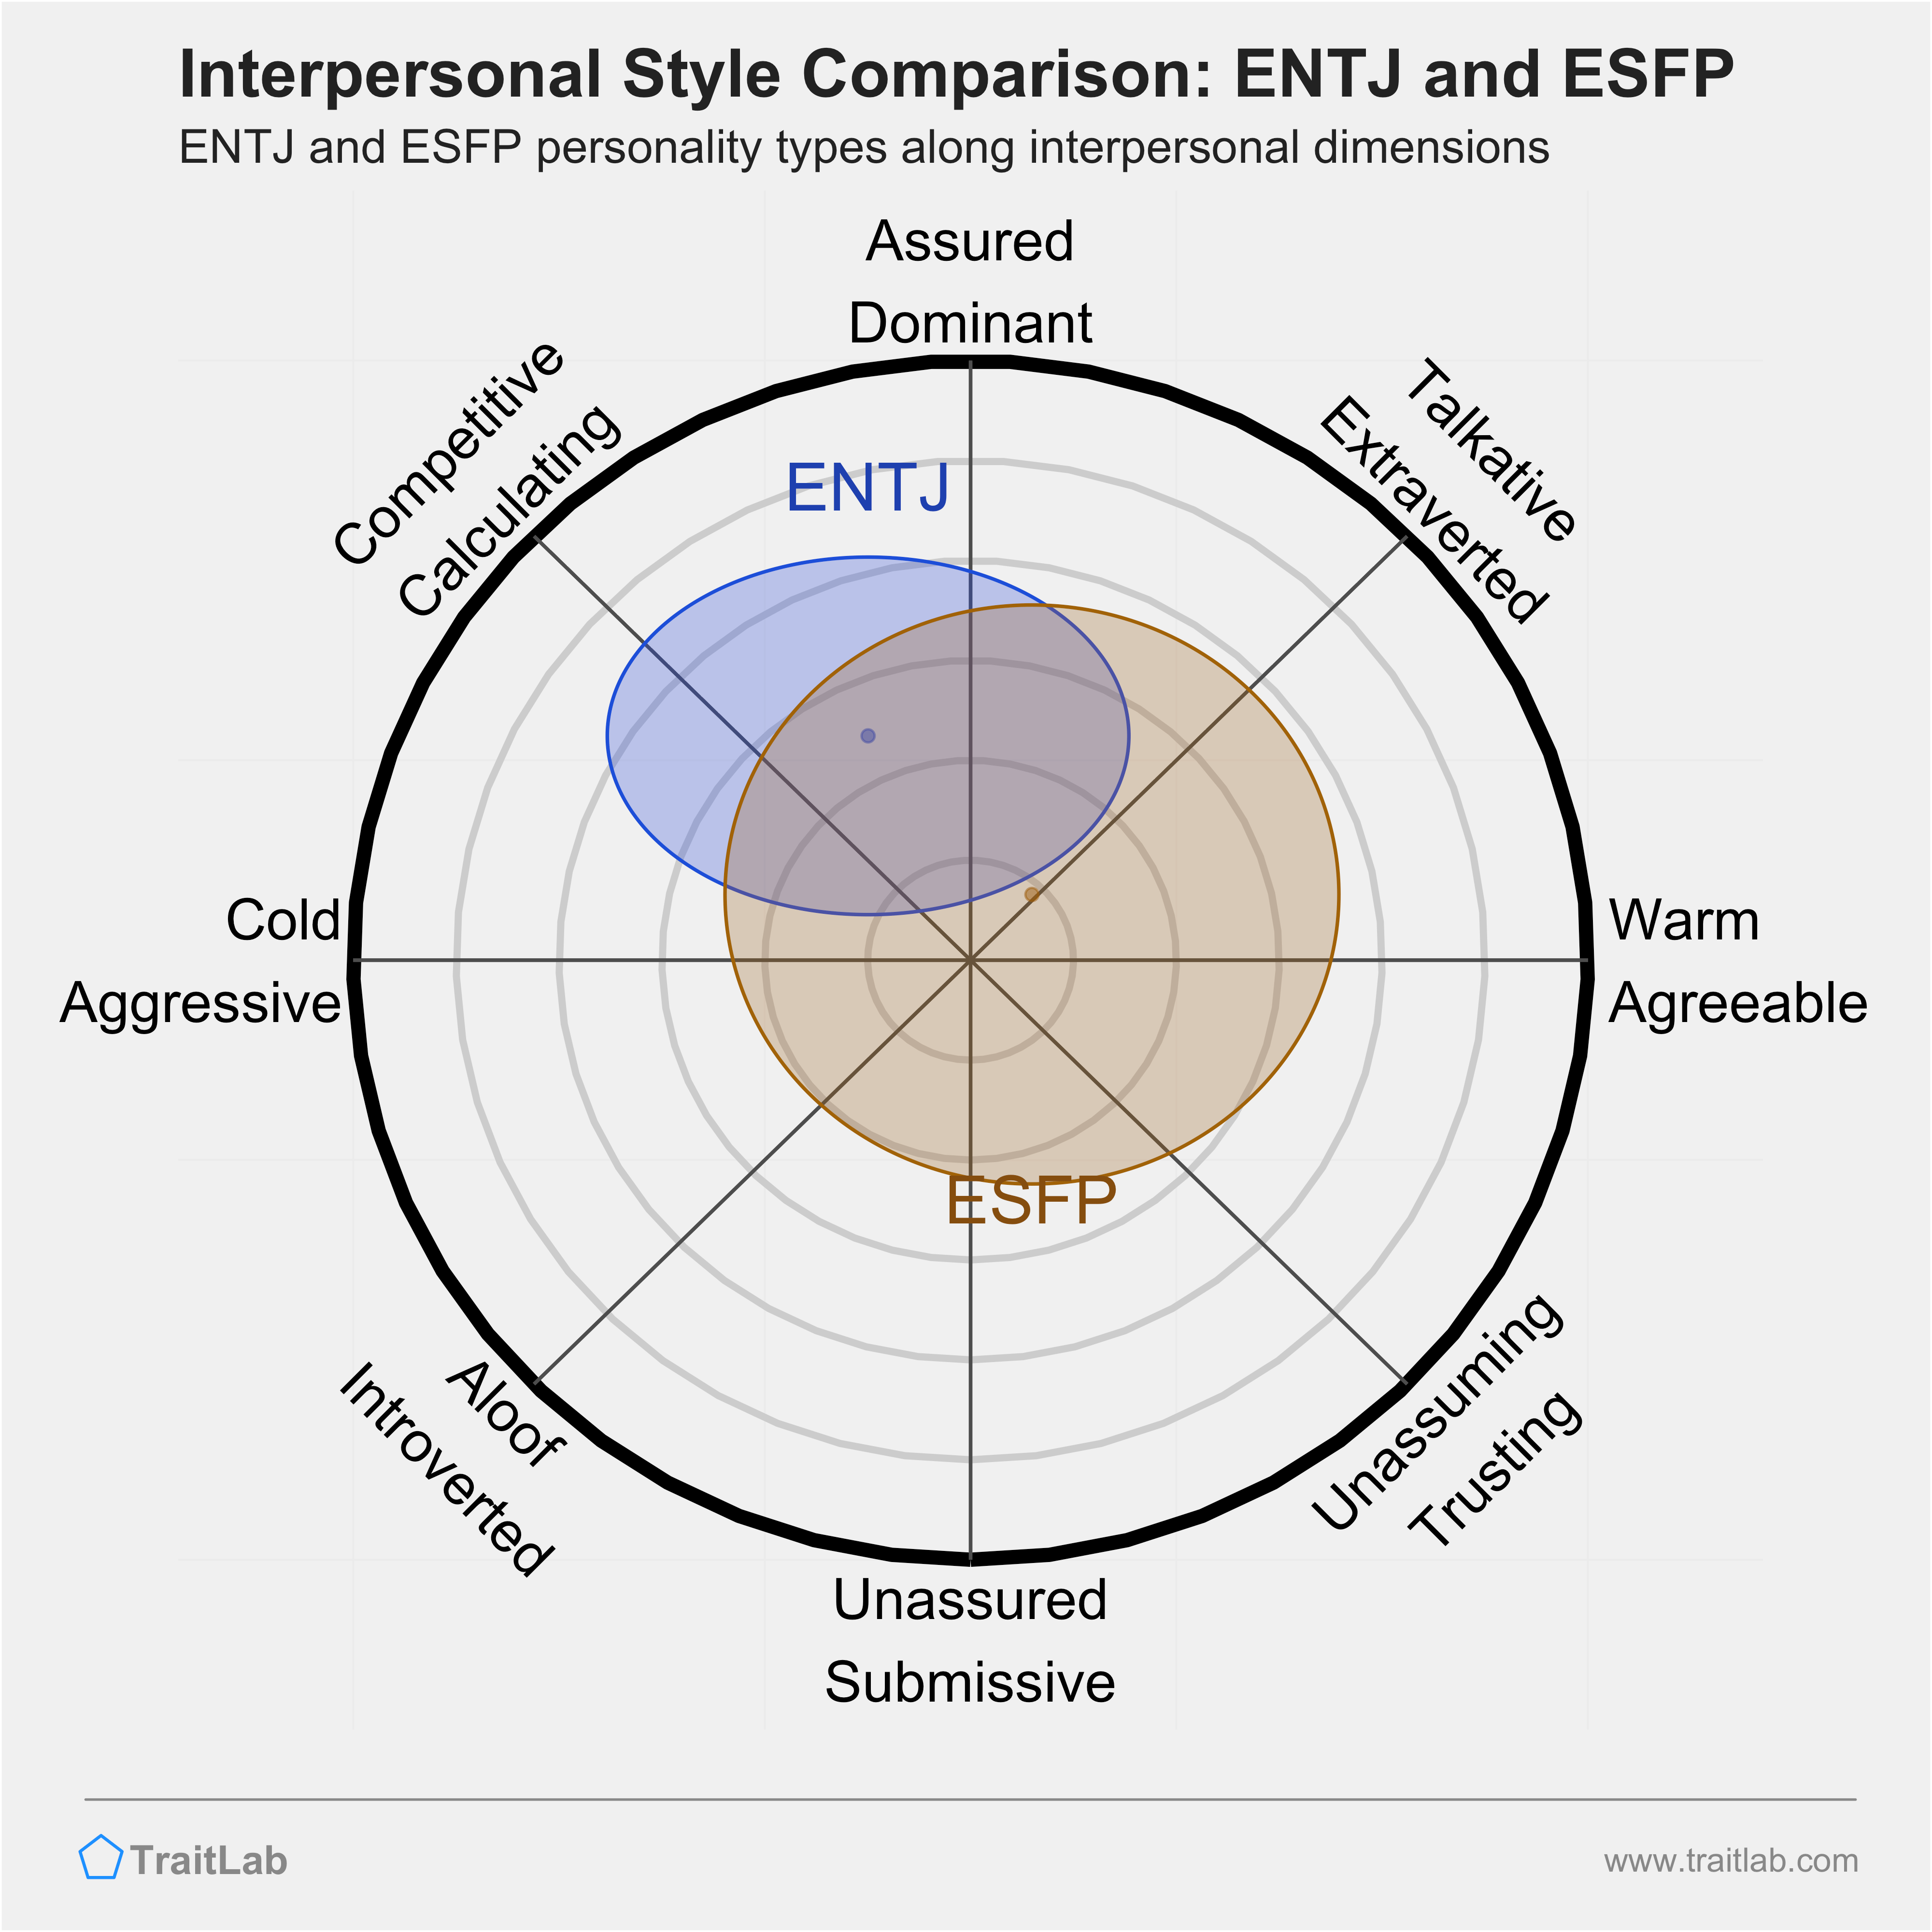 ENTJ and ESFP comparison across interpersonal dimensions